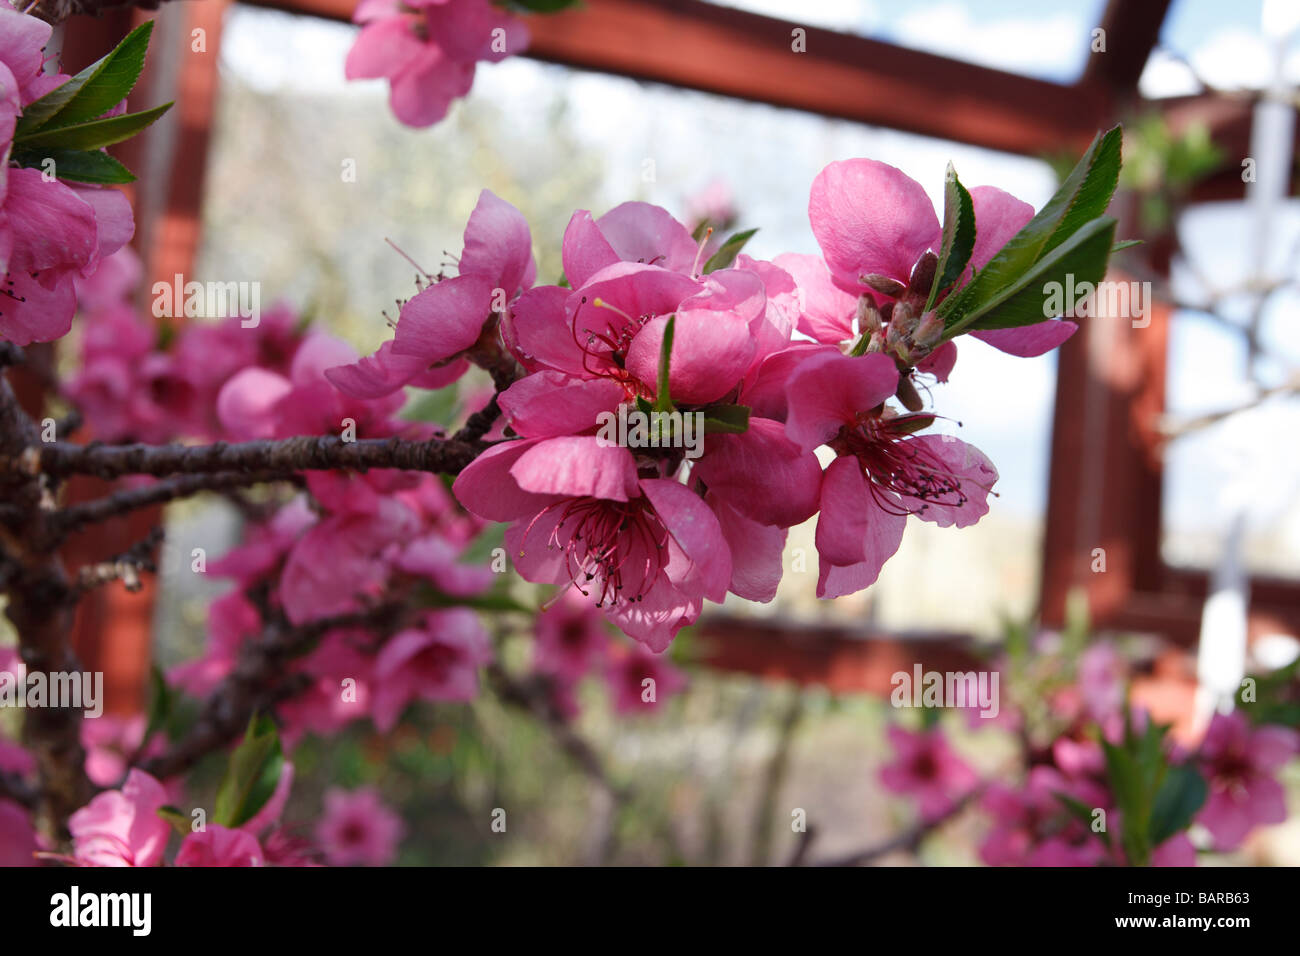 PEACH Prunus persica CLOSE UP OF FLOWERS Stock Photo